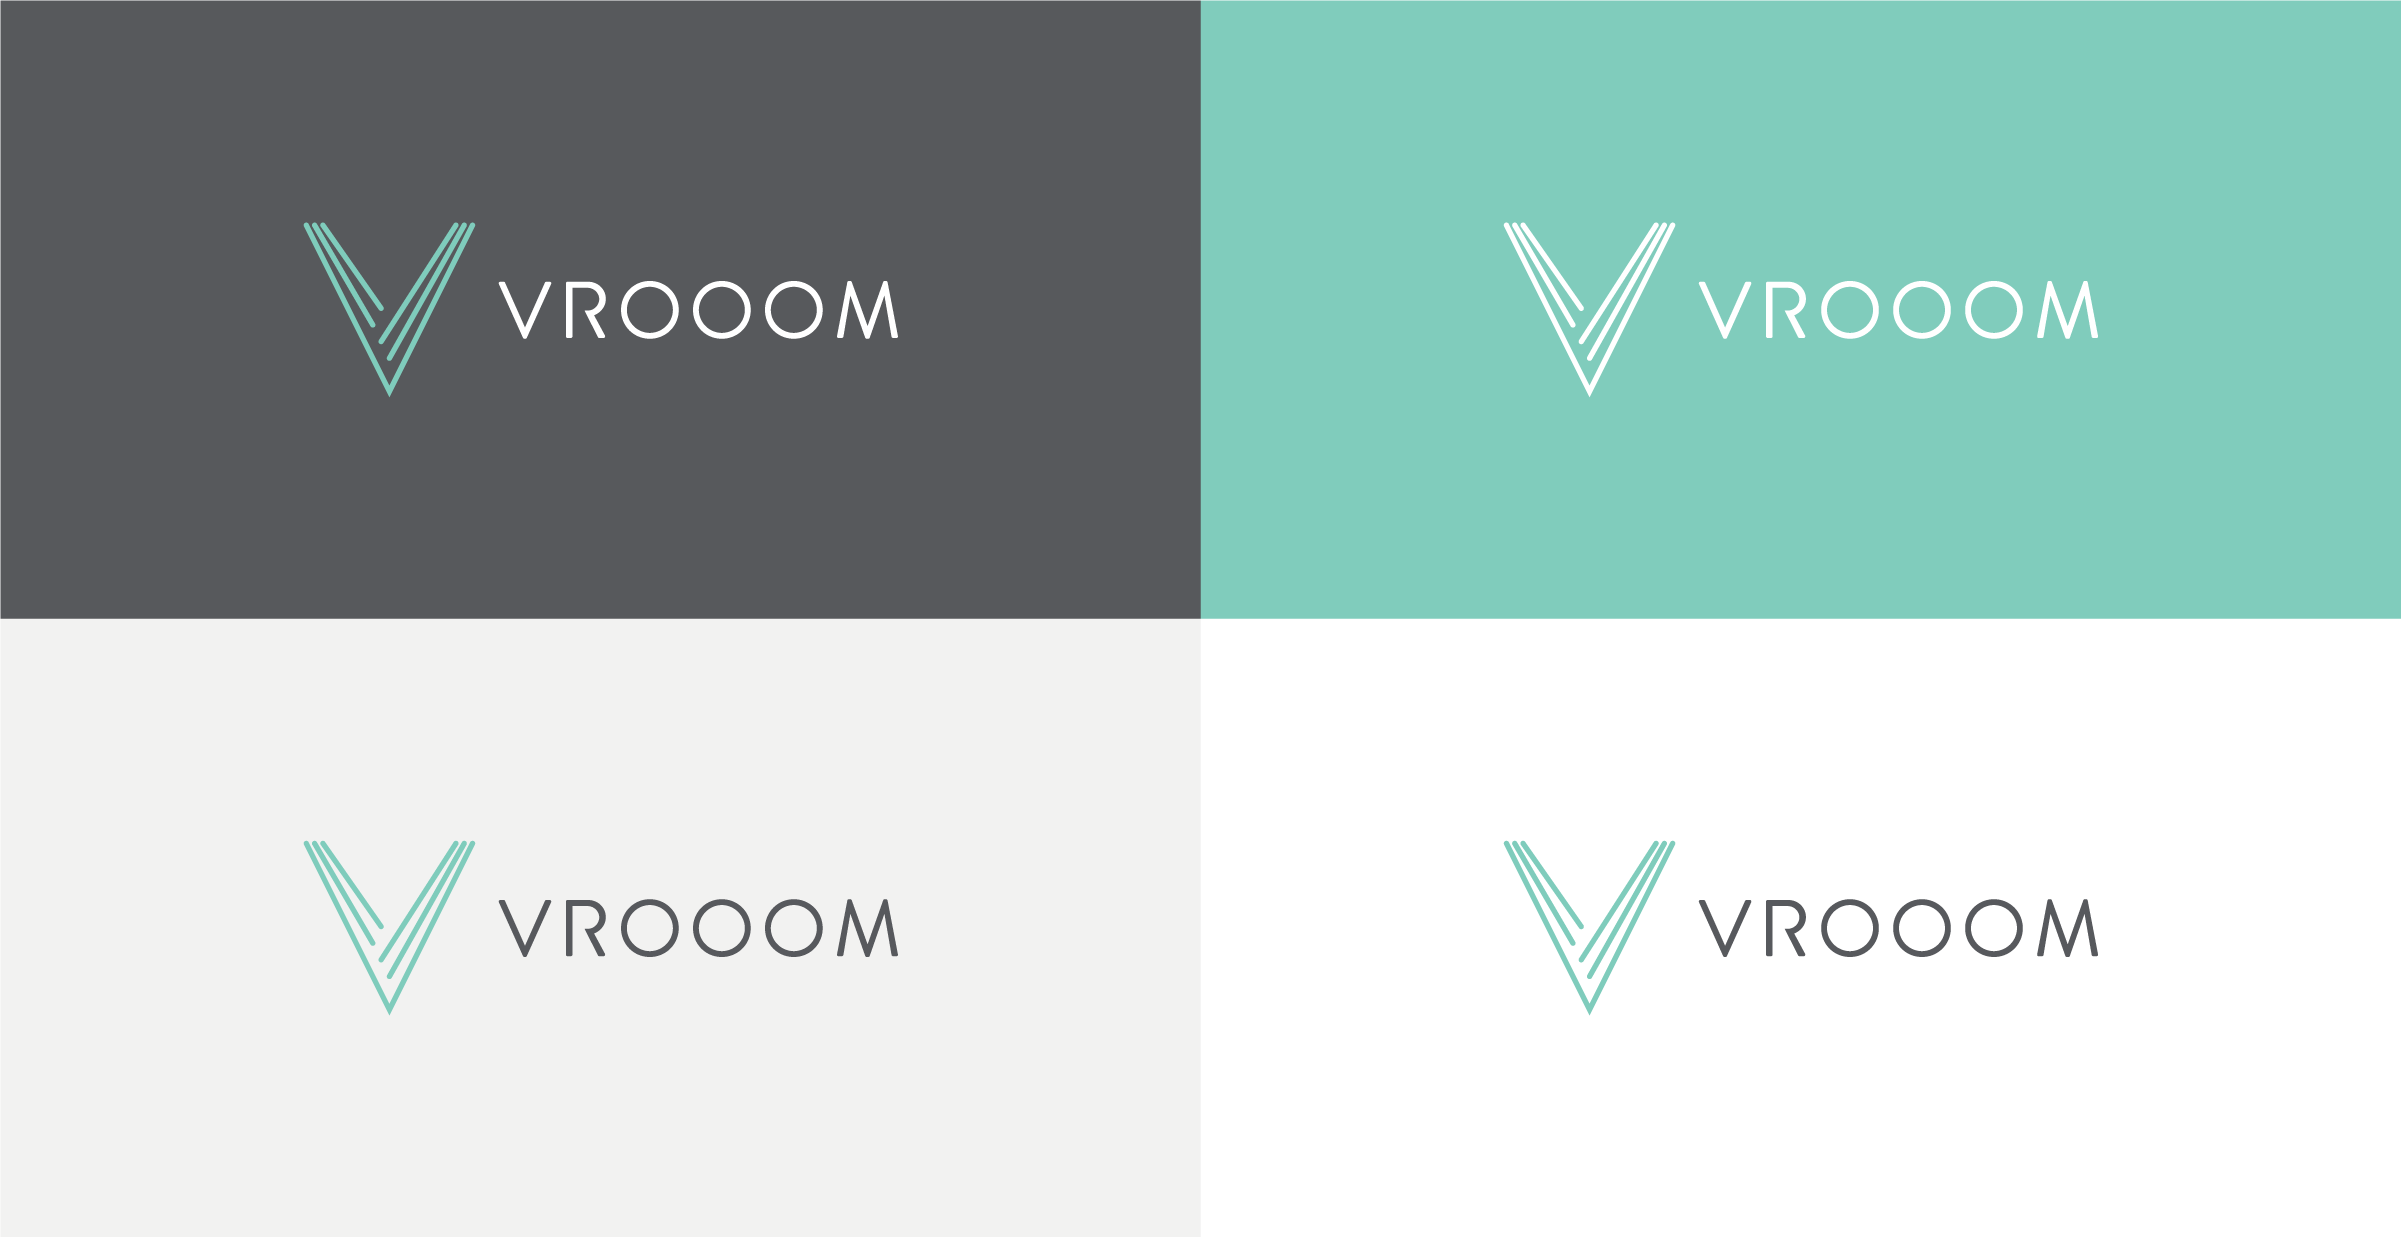 VROOOM Driver-less Car Company Brand Logo Color Variants